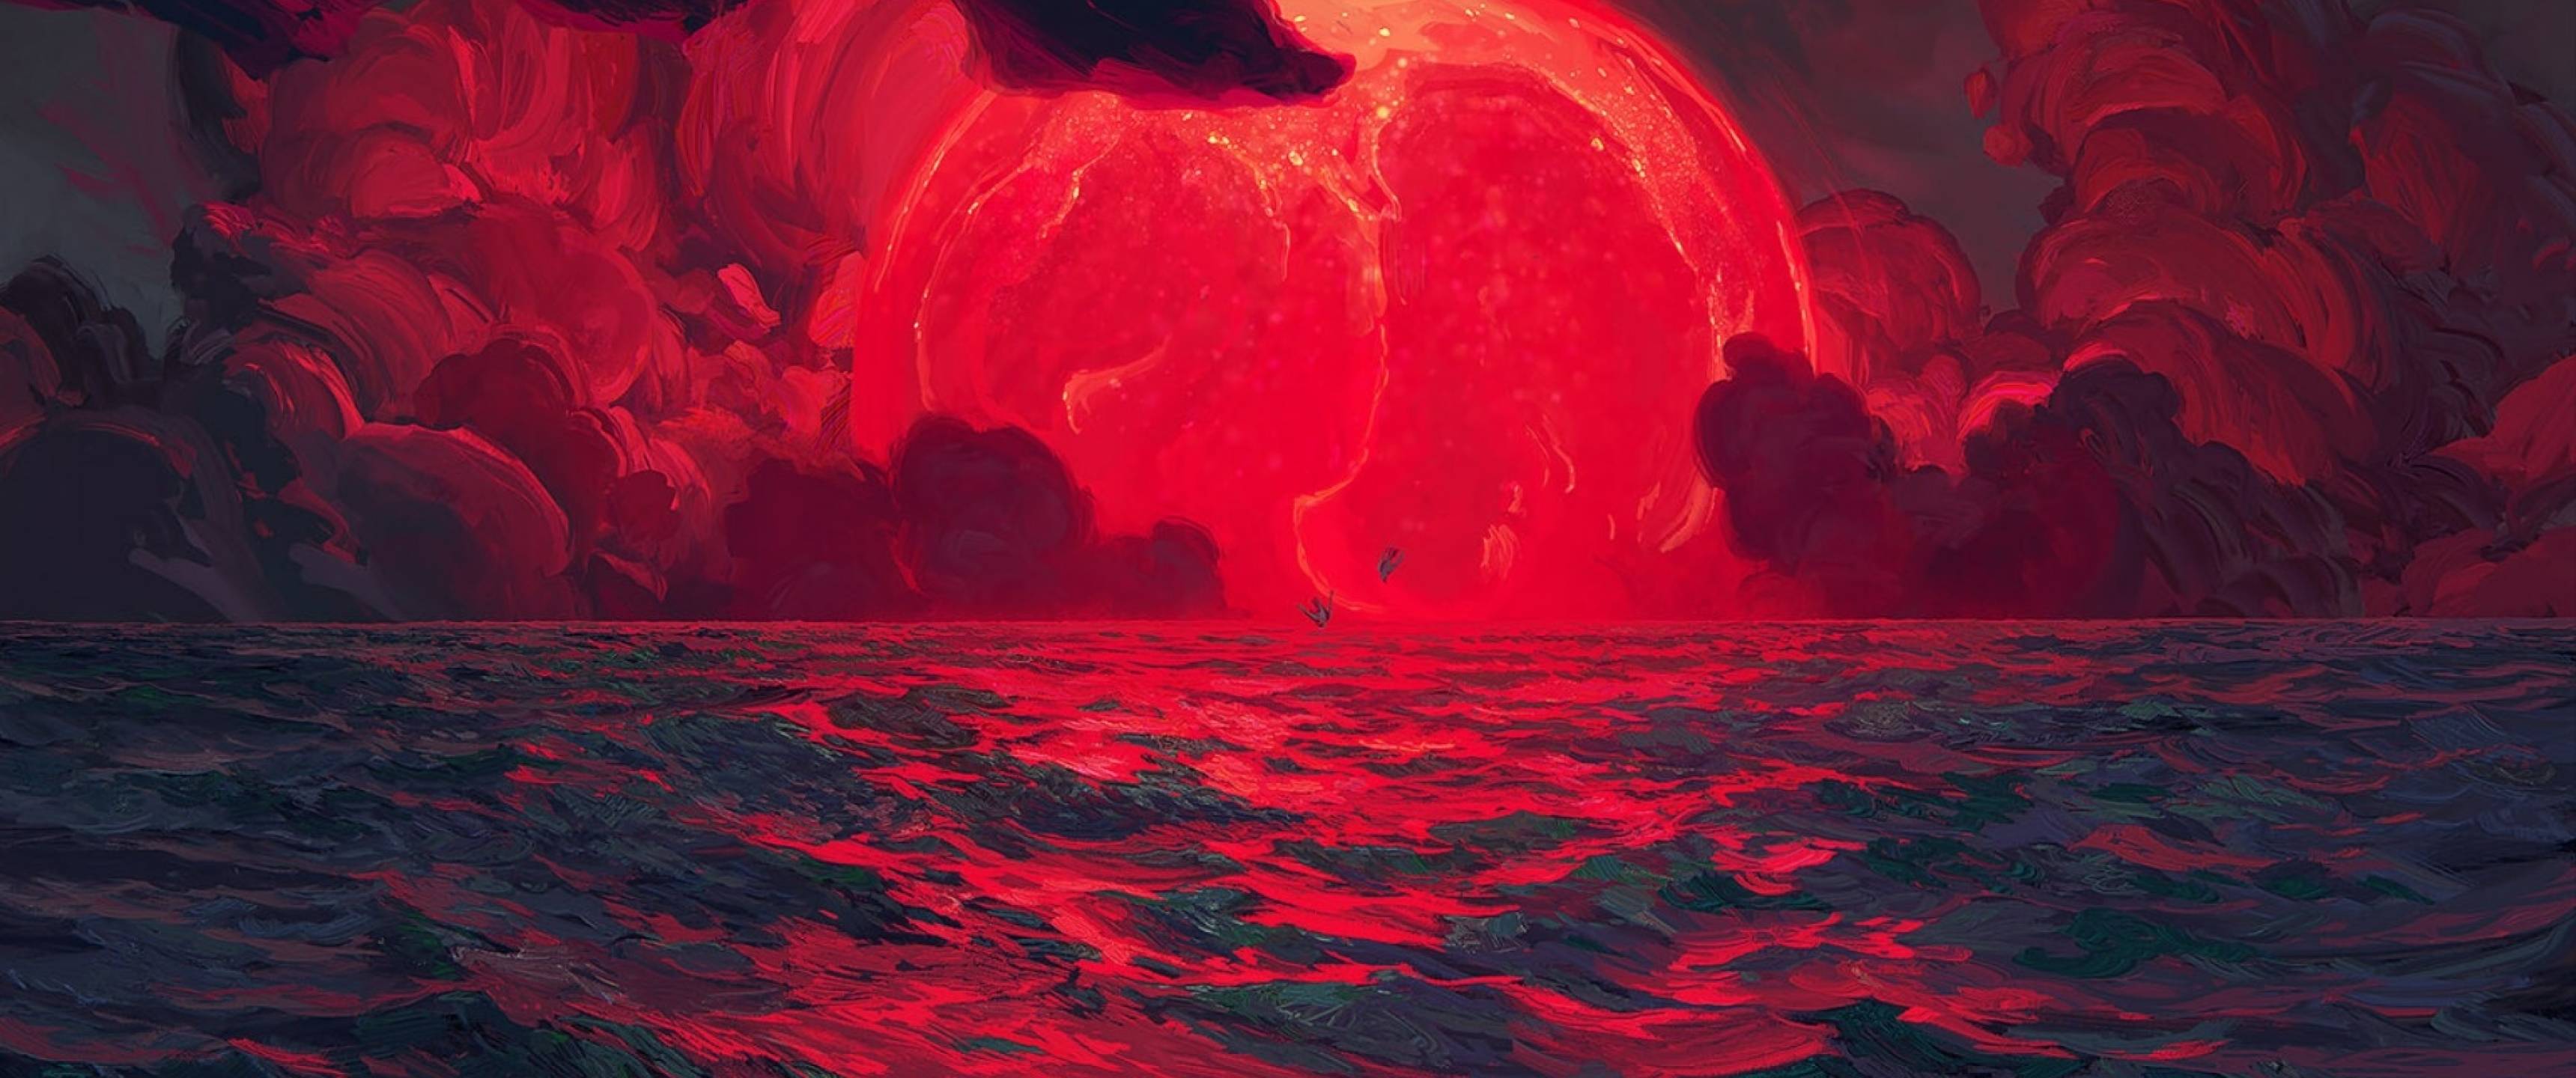 A red sun sets over a dark sea - 3440x1440